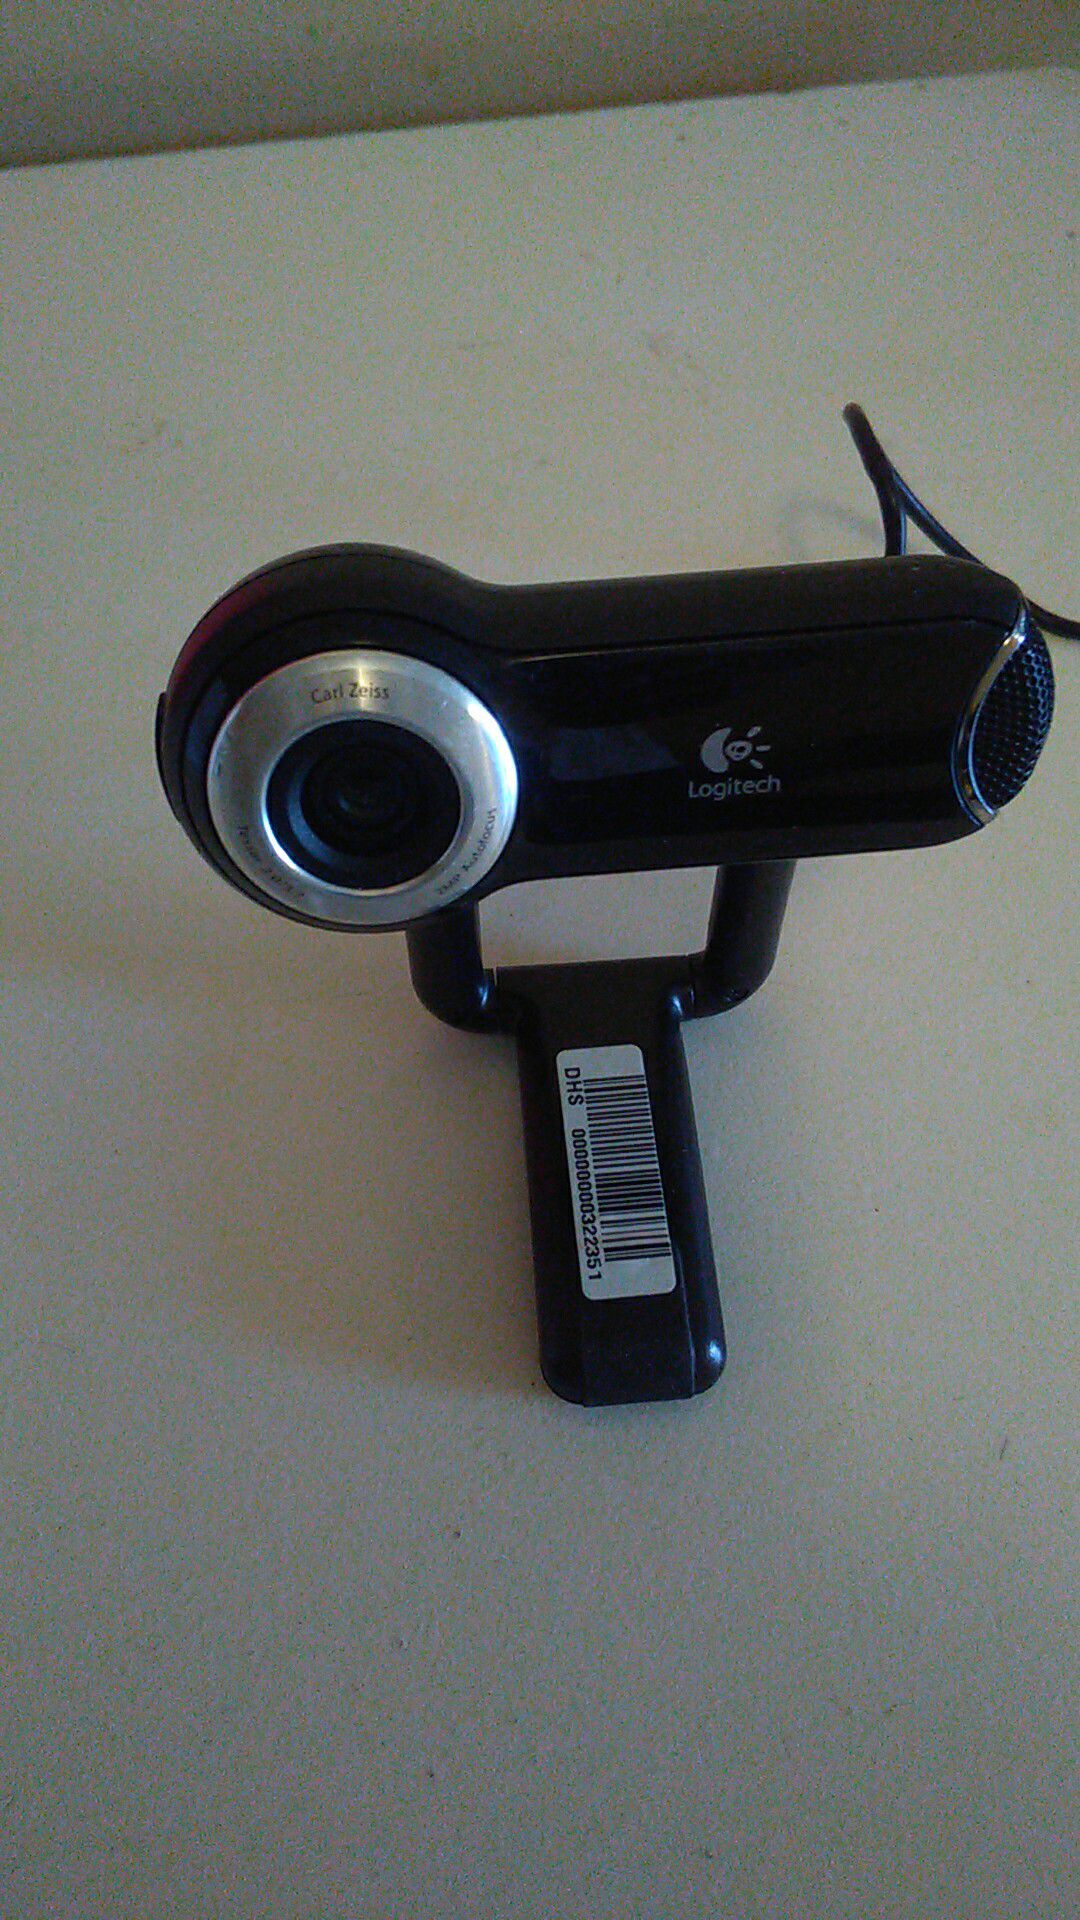 Logitech Computer Laptop or Desktop USB Camera